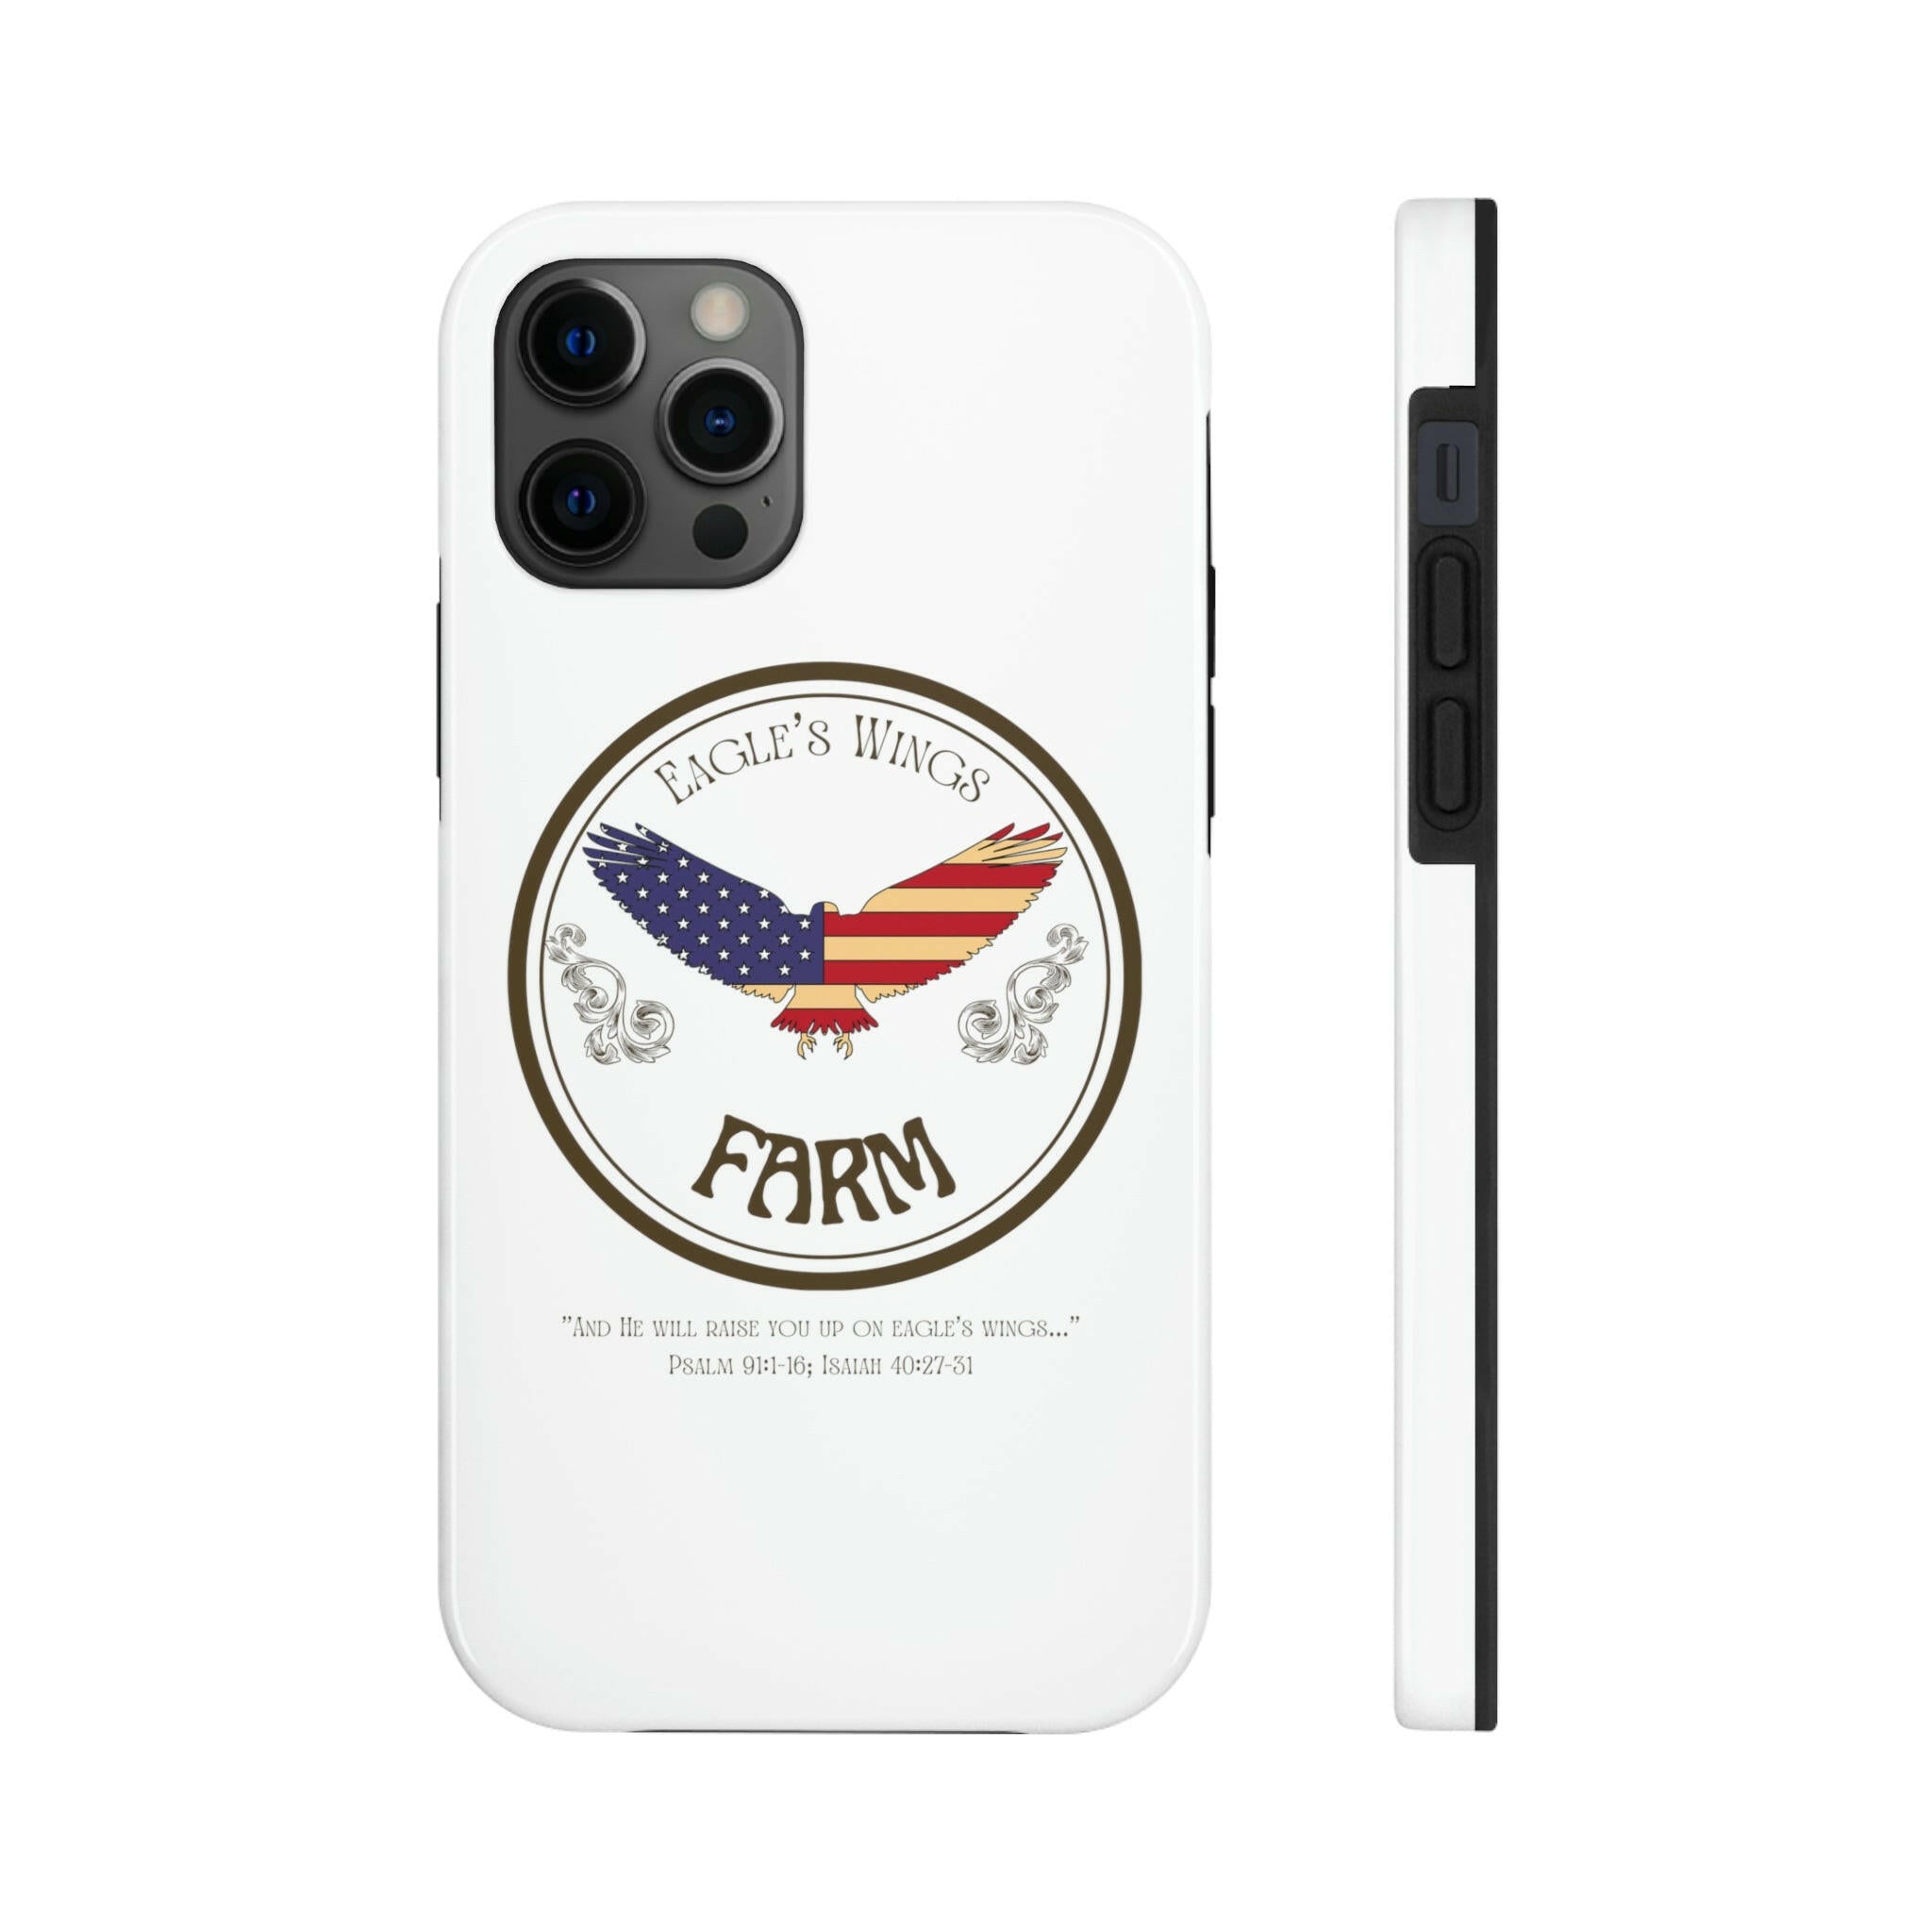 Eagle's Wings Farm - Tough iPhone Cases.